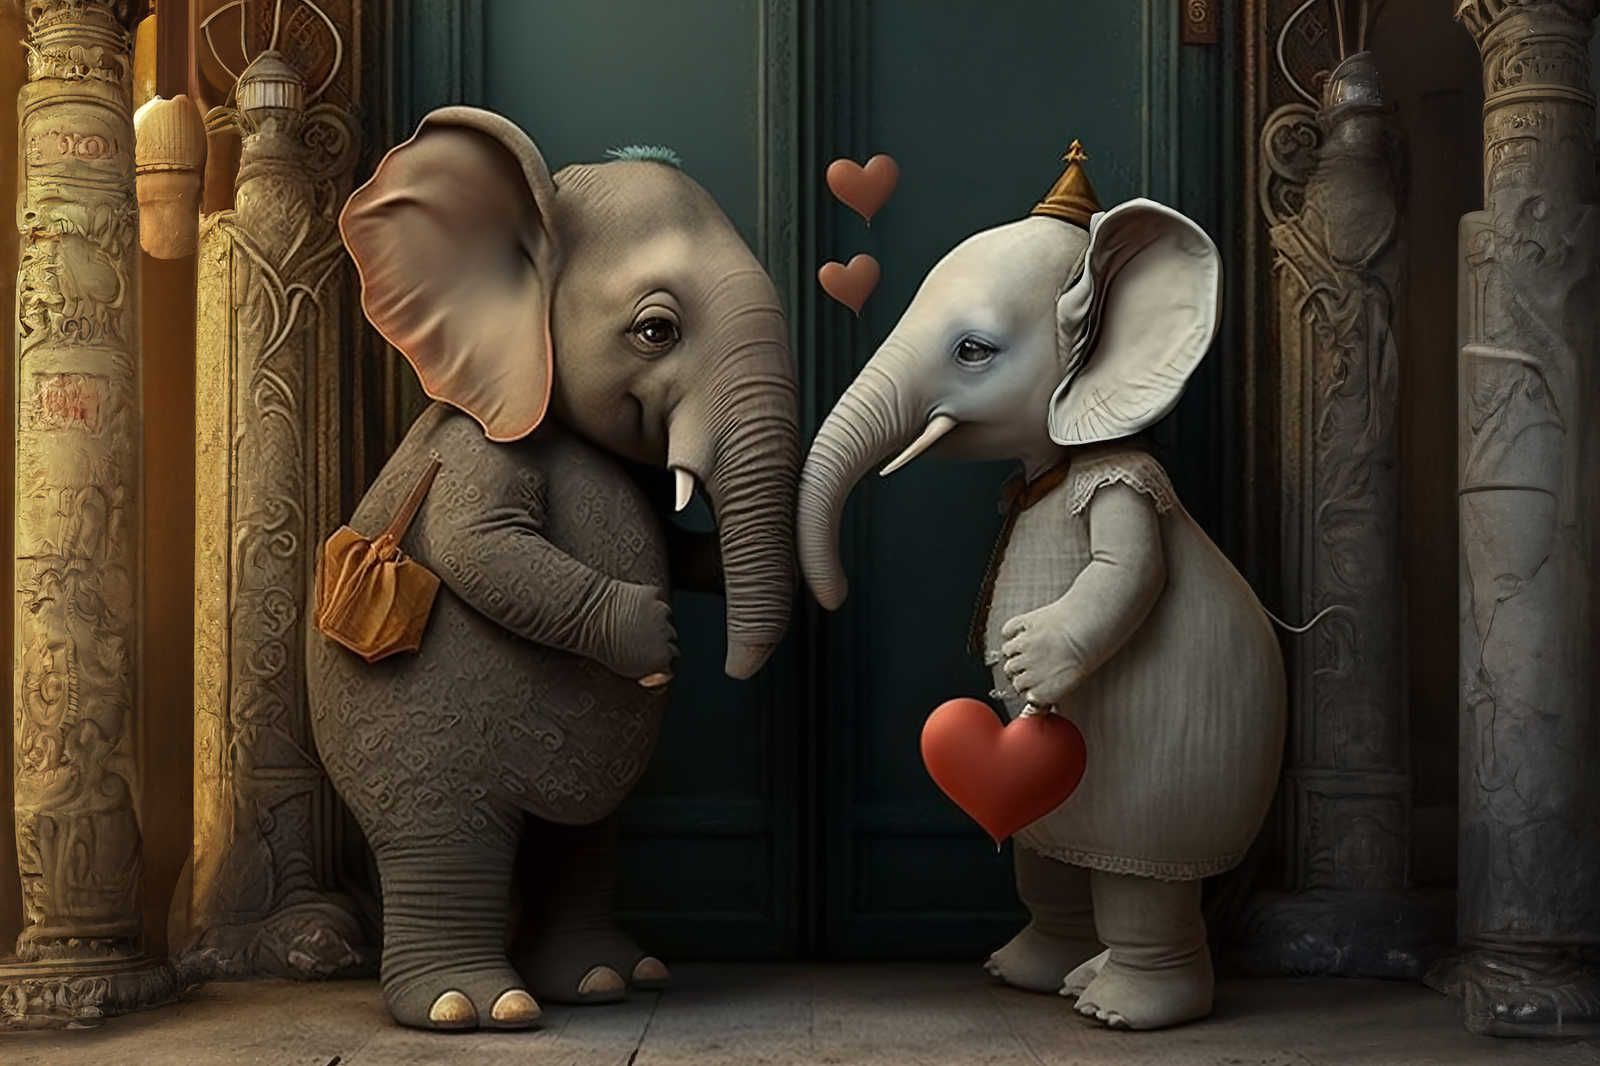             KI-Leinwandbild »elephant love« – 120 cm x 80 cm
        